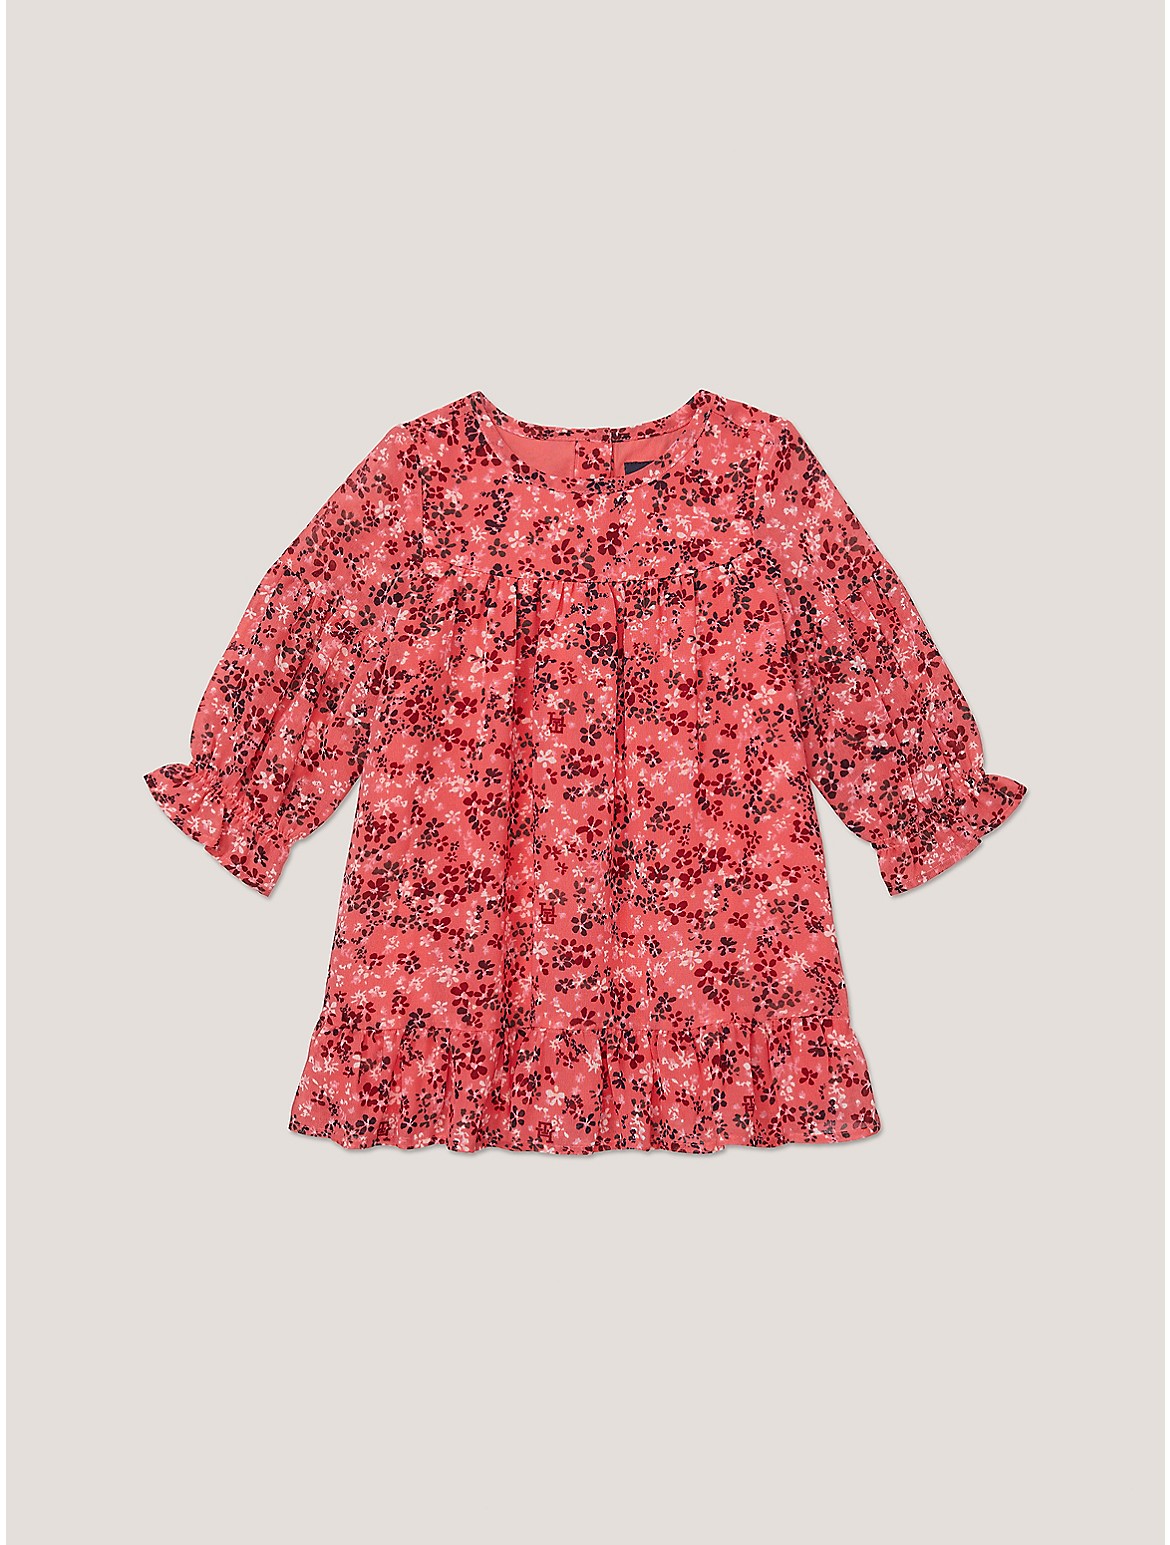 Tommy Hilfiger Girls' Babies' Floral Print Dress - Pink - 18M